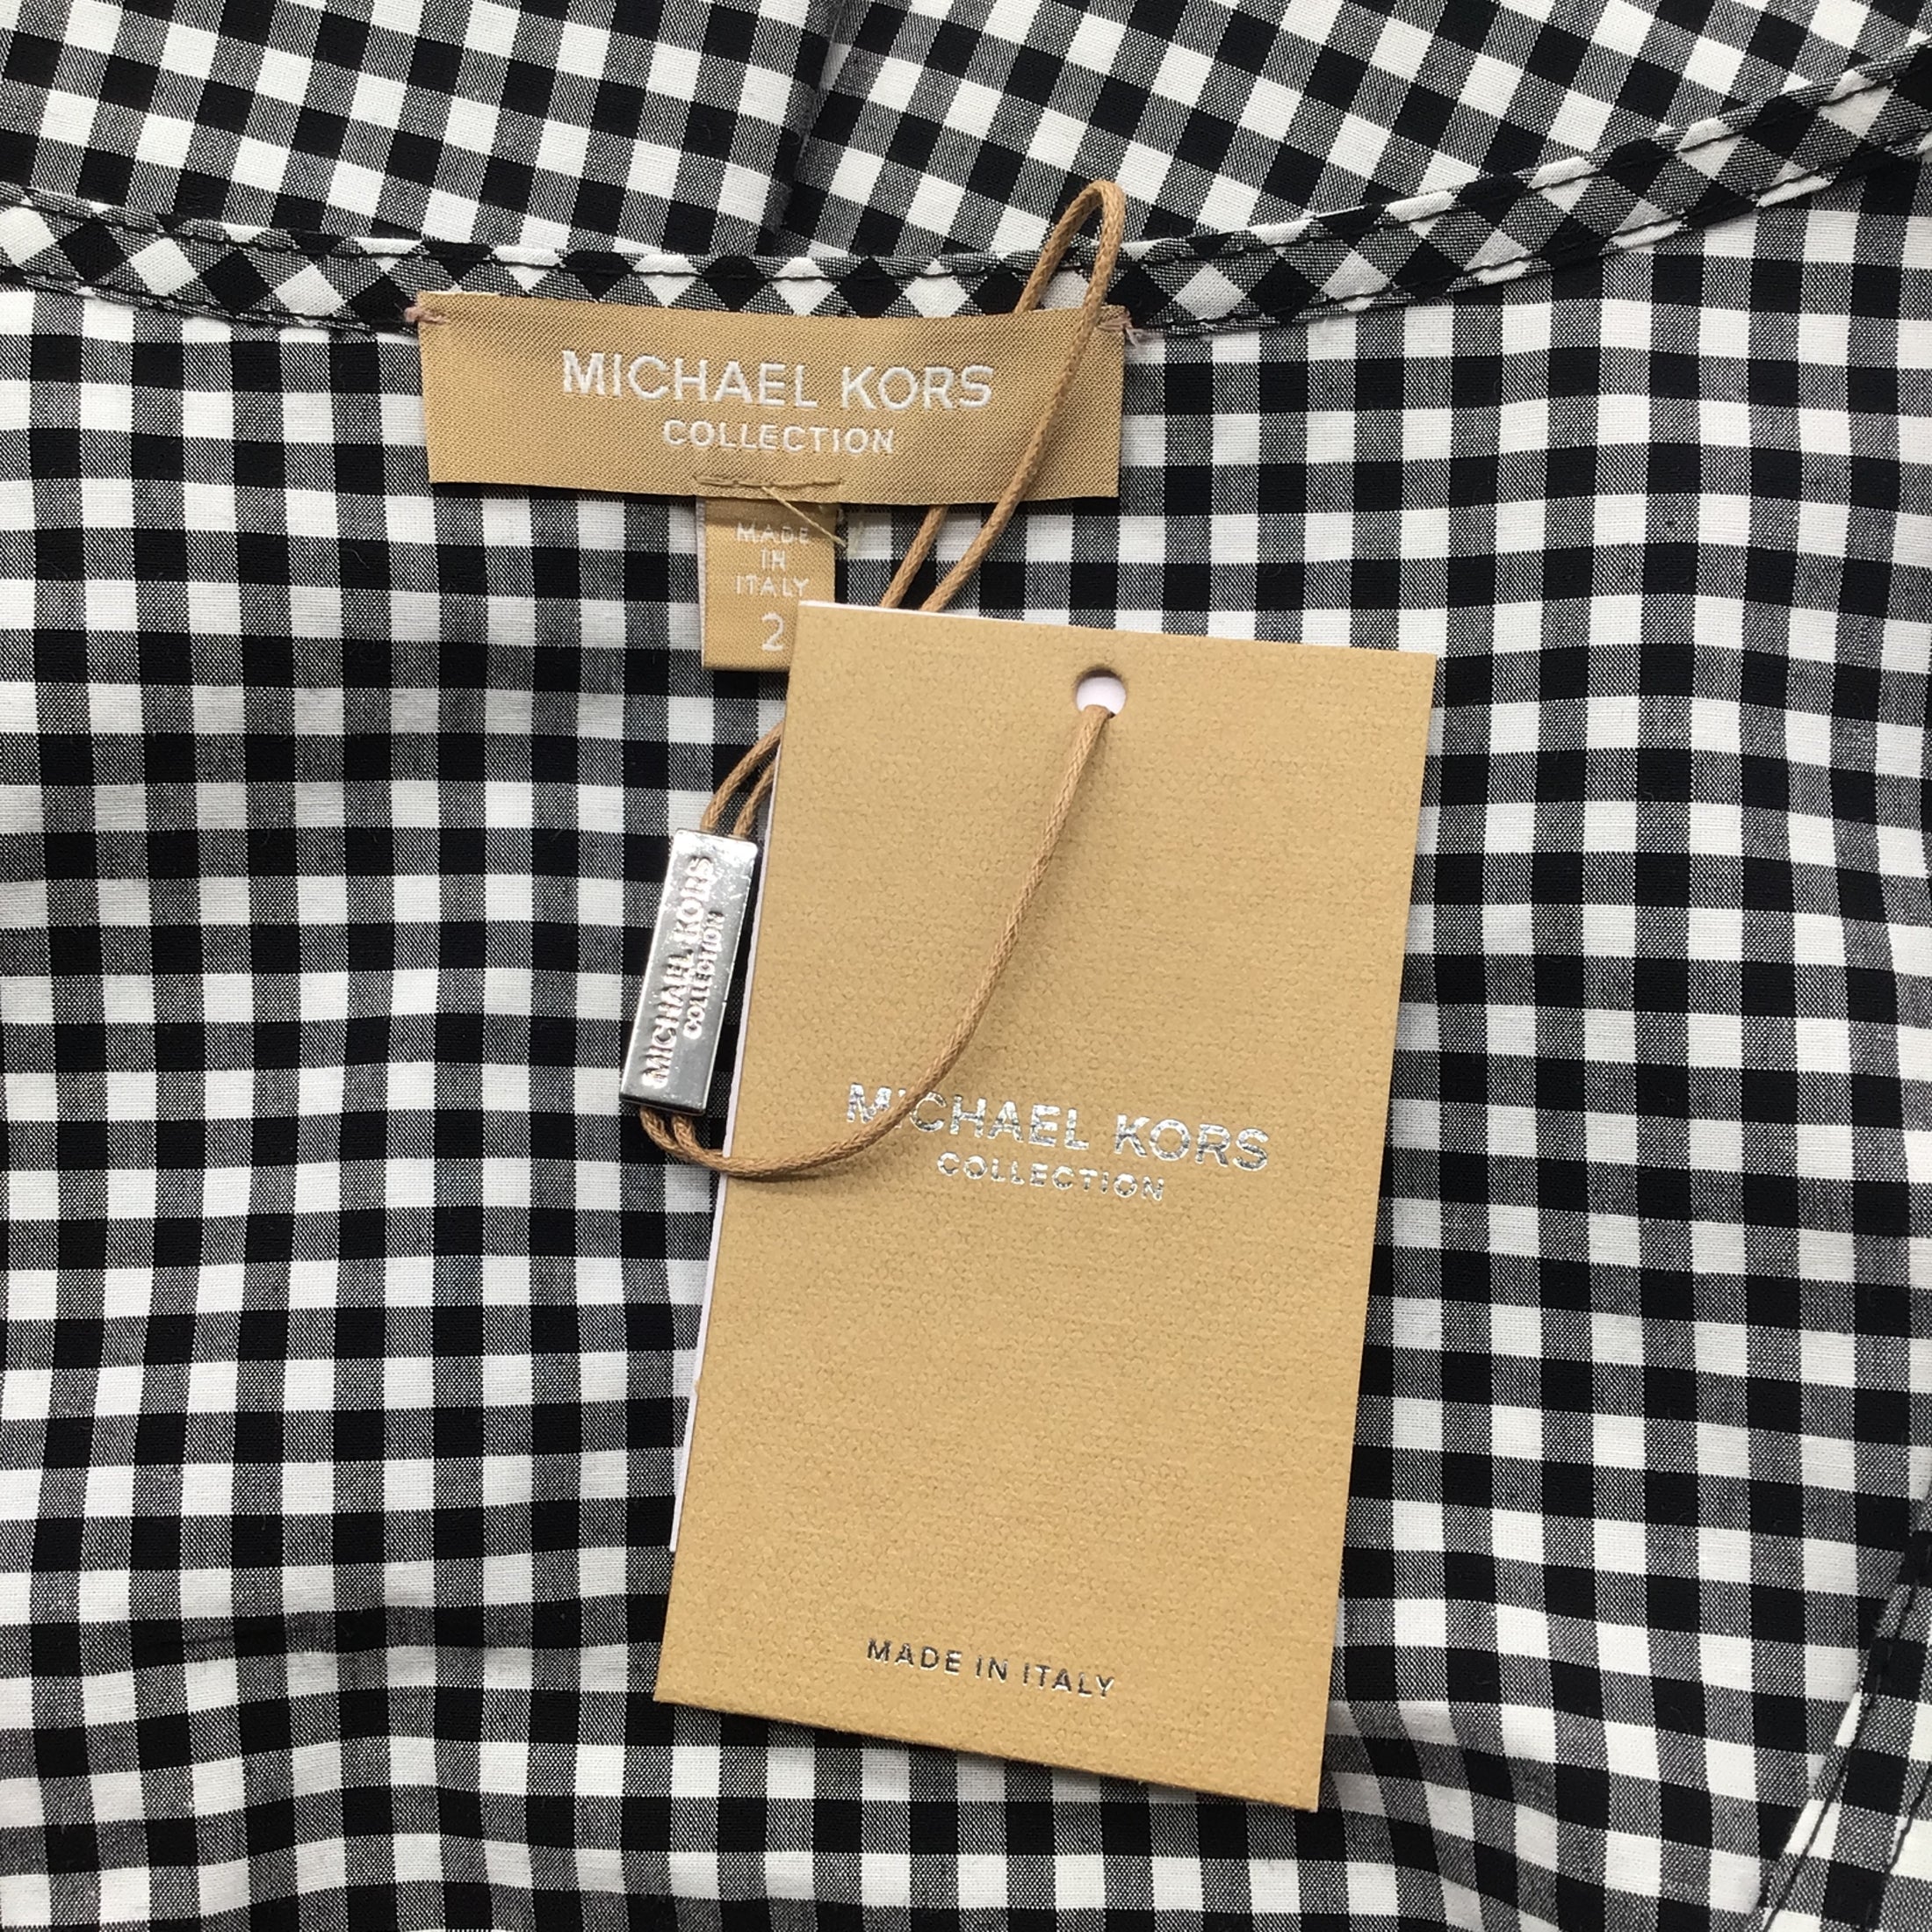 Michael Kors Collection Black / Optical White Resort 2019 Sleeveless Checkered Gingham Dress